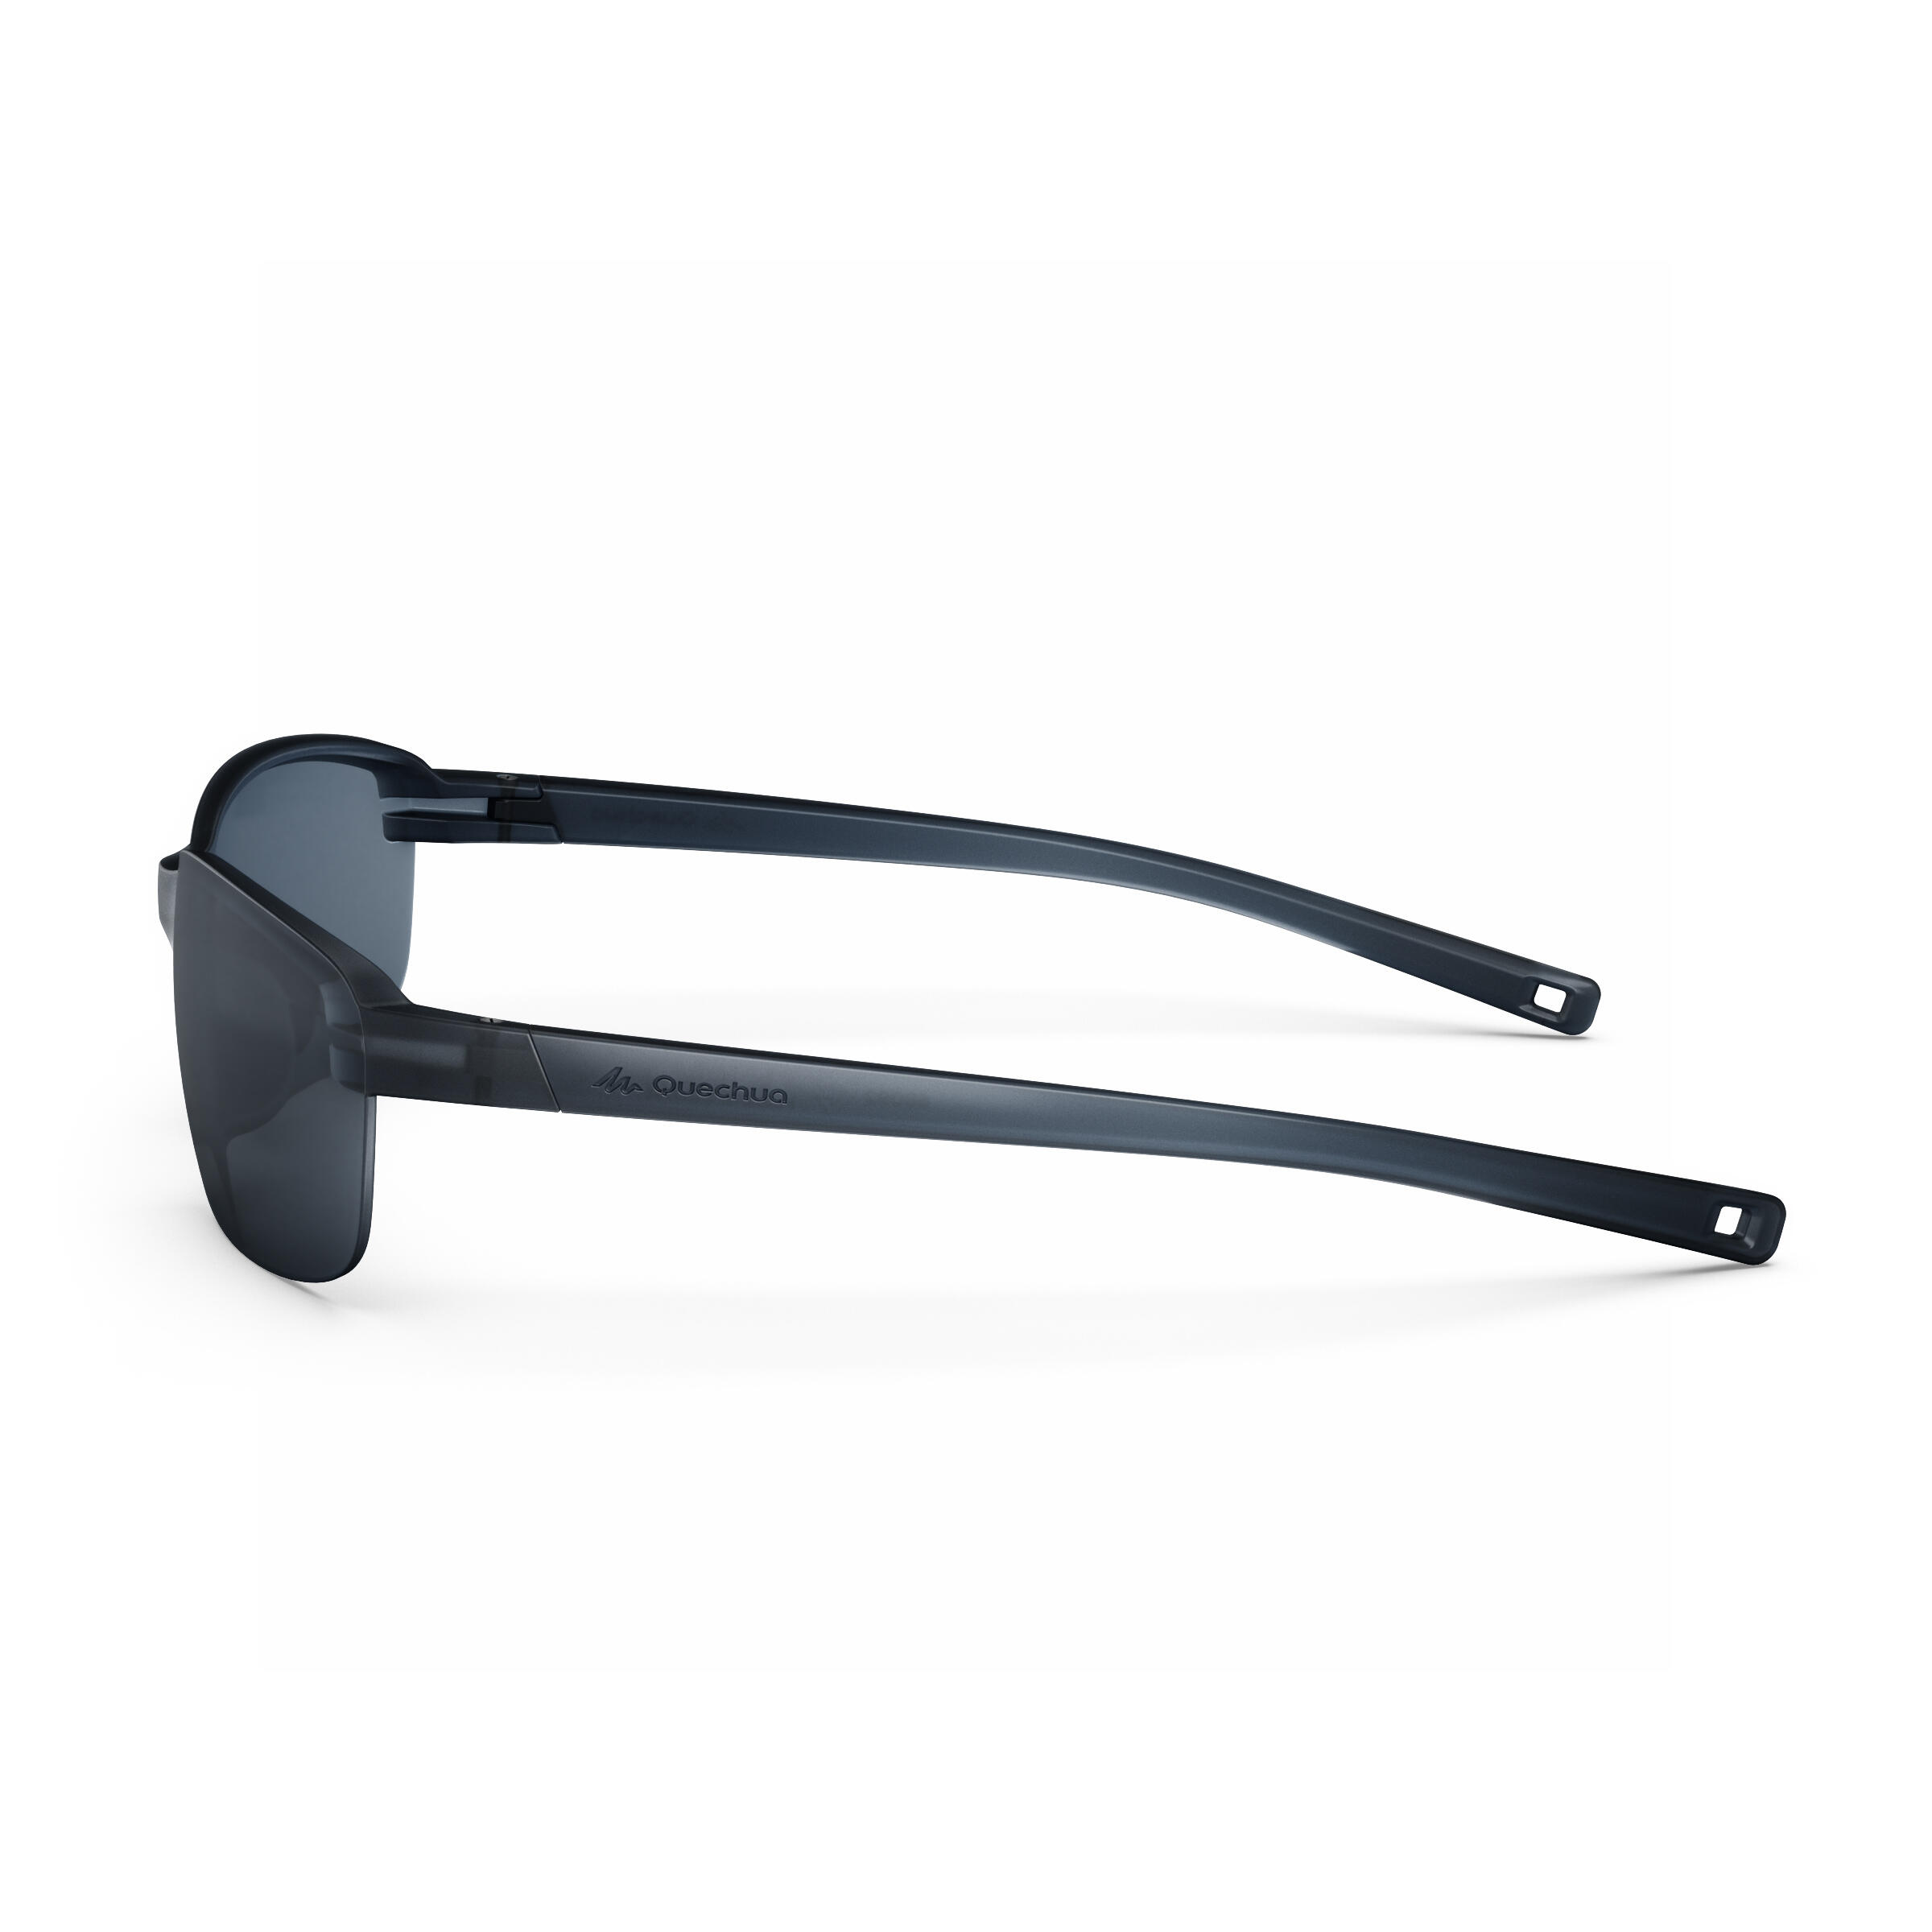 Buy Men Sunglasses Online | Accessories | Decathlon KSA | Decathlon KSA